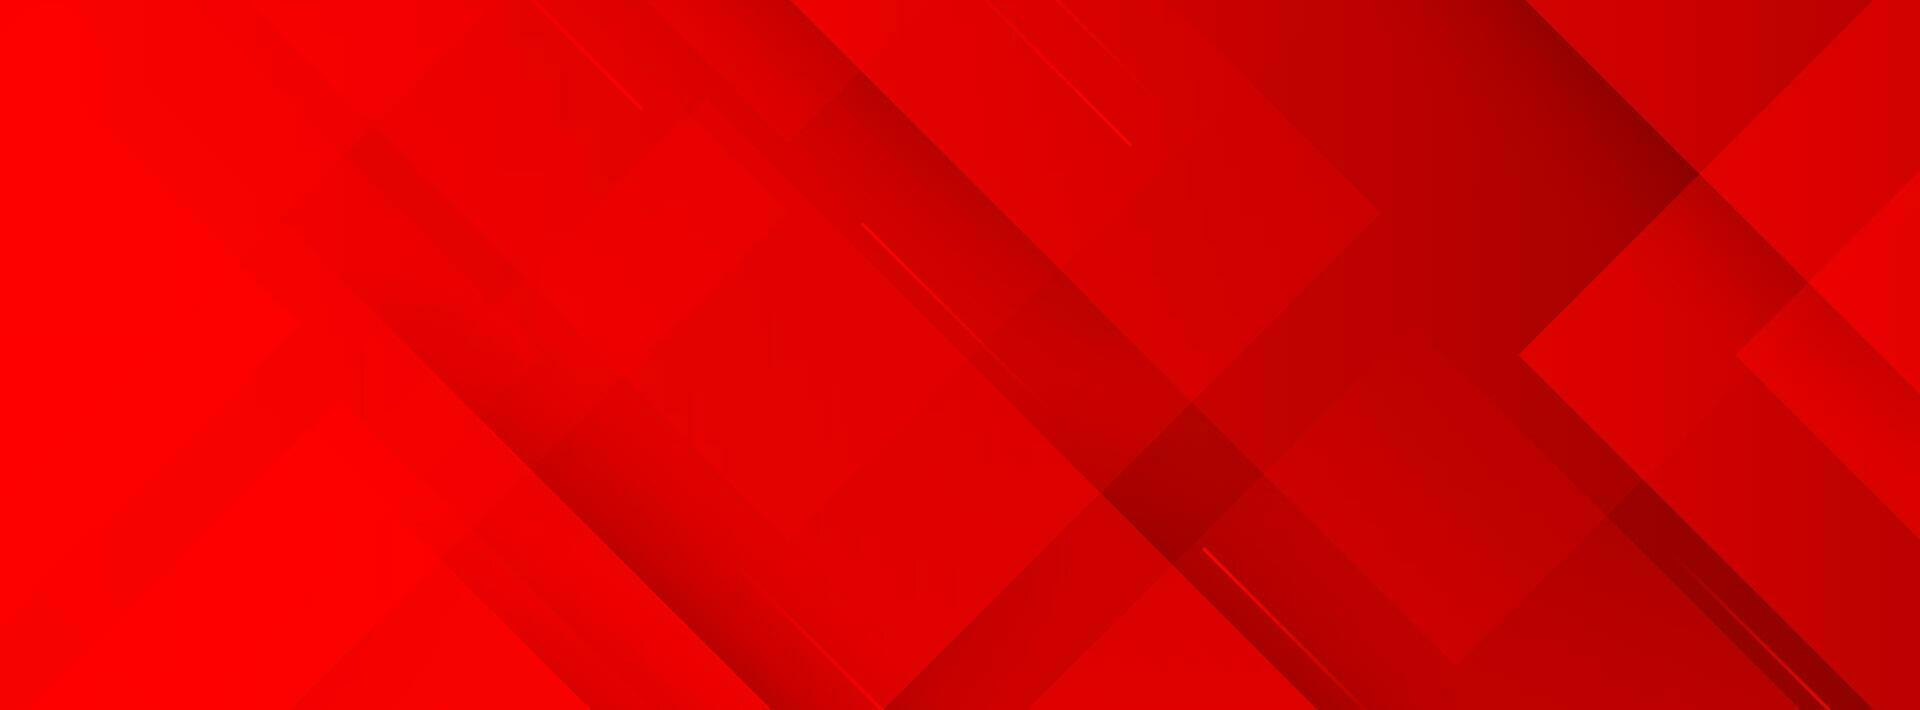 röd abstrakt bakgrund. snedstreck effekt stil vektor